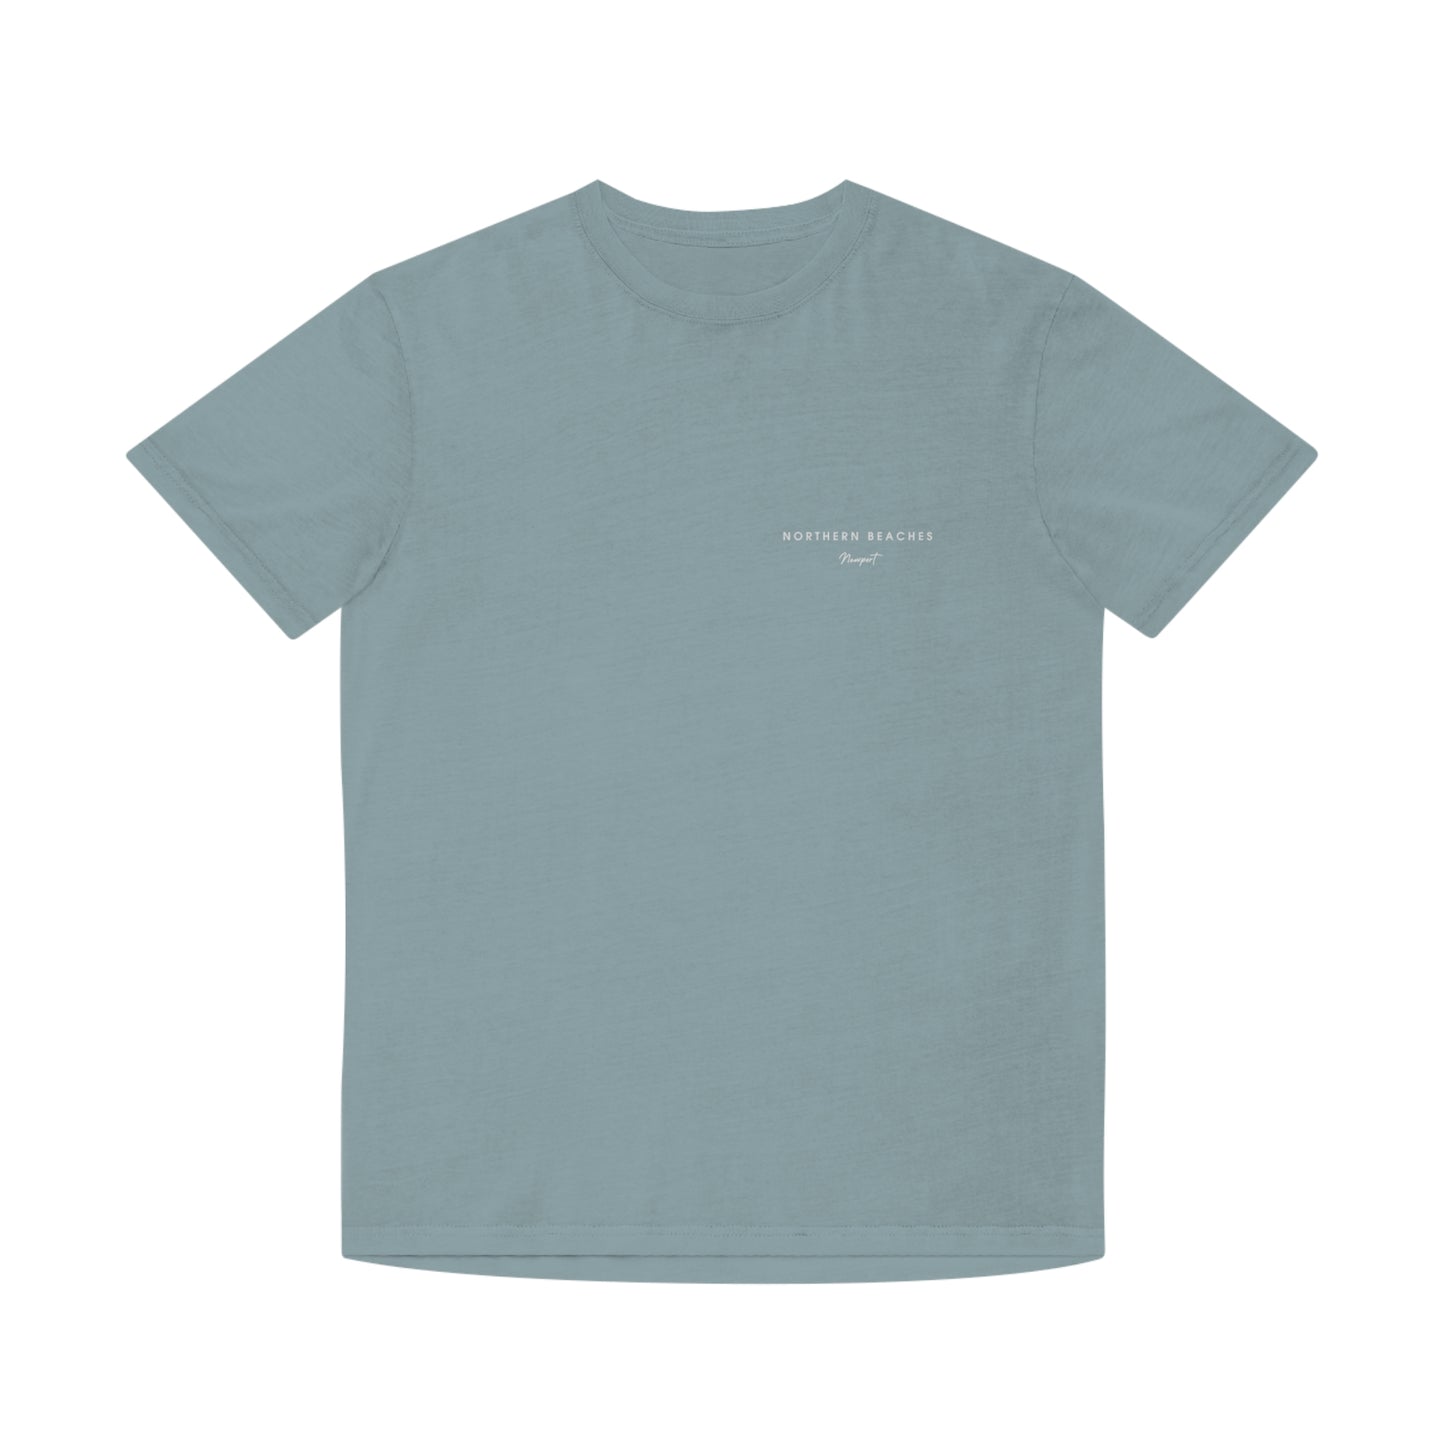 Cotton T-Shirt Northern Beaches Newport logo